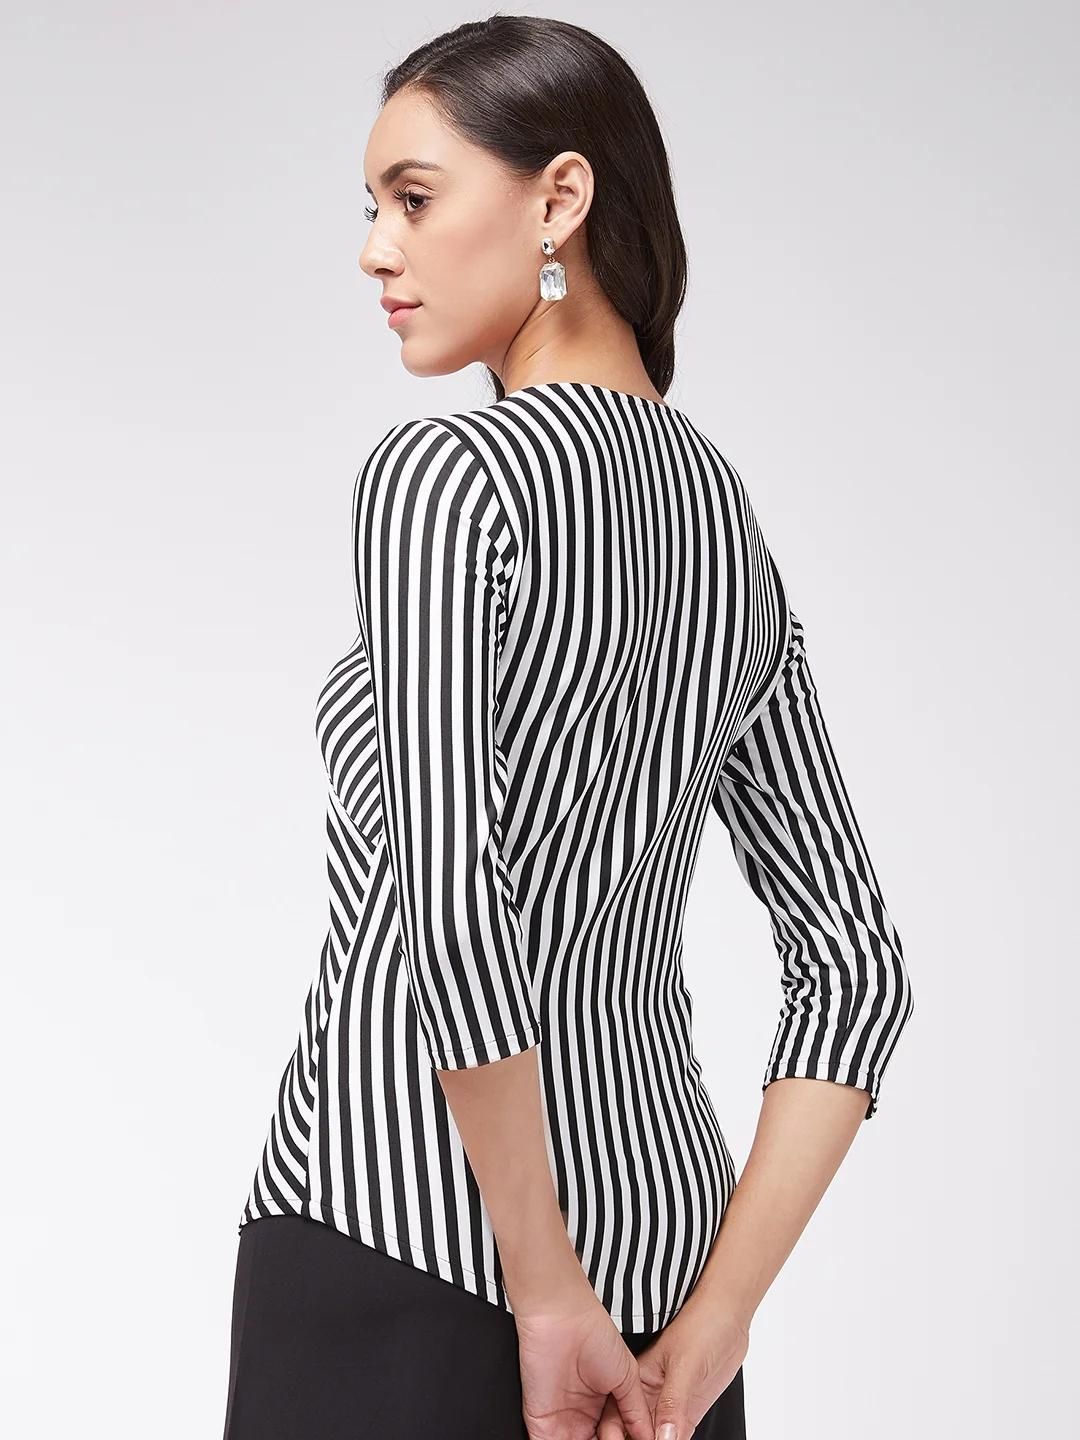 PANNKH Monocromatic Black & White Stripe Overlap Top ShopFastify